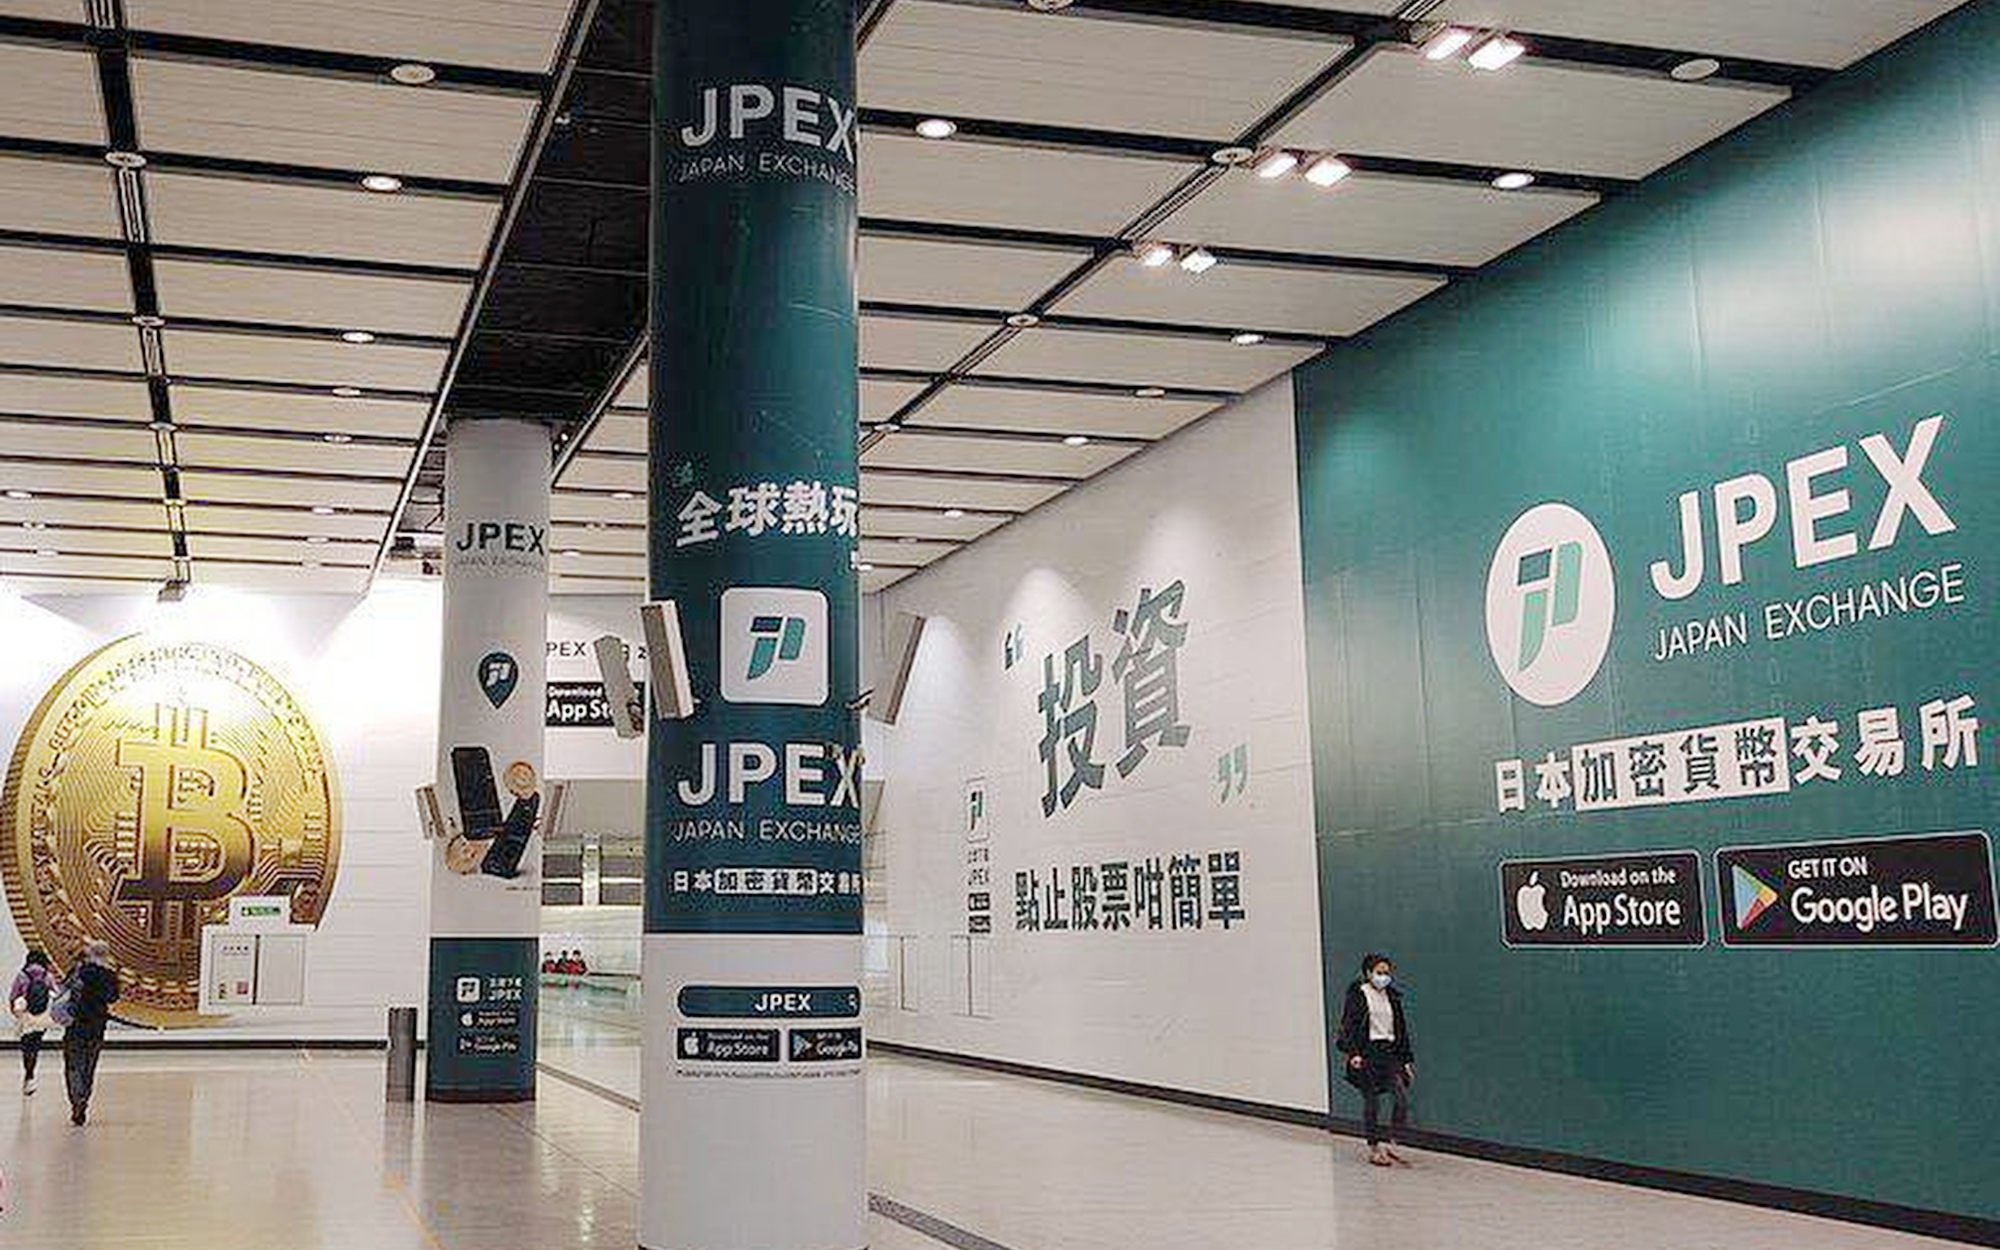 Hong Kong JPEX cryptocurrency scandal: 72 arrested, HK$228 million in assets frozen so far